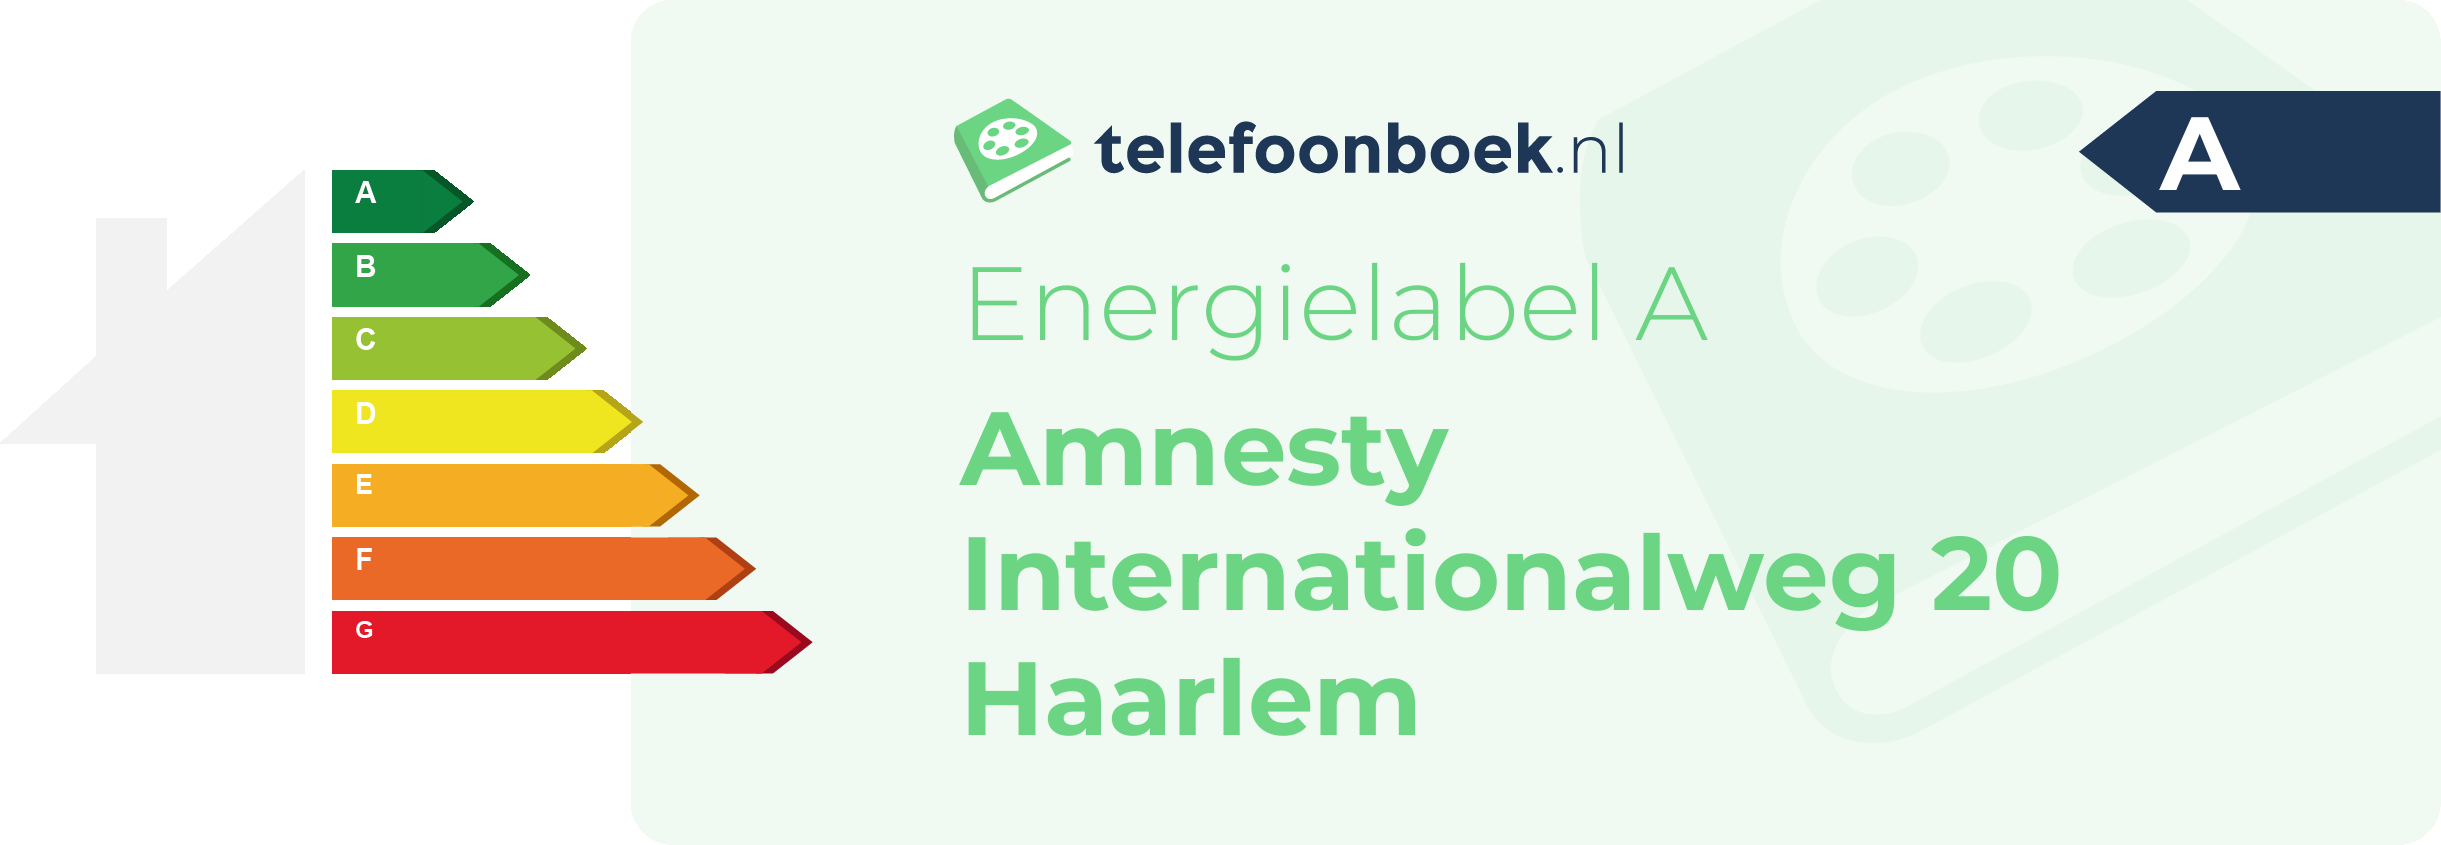 Energielabel Amnesty Internationalweg 20 Haarlem